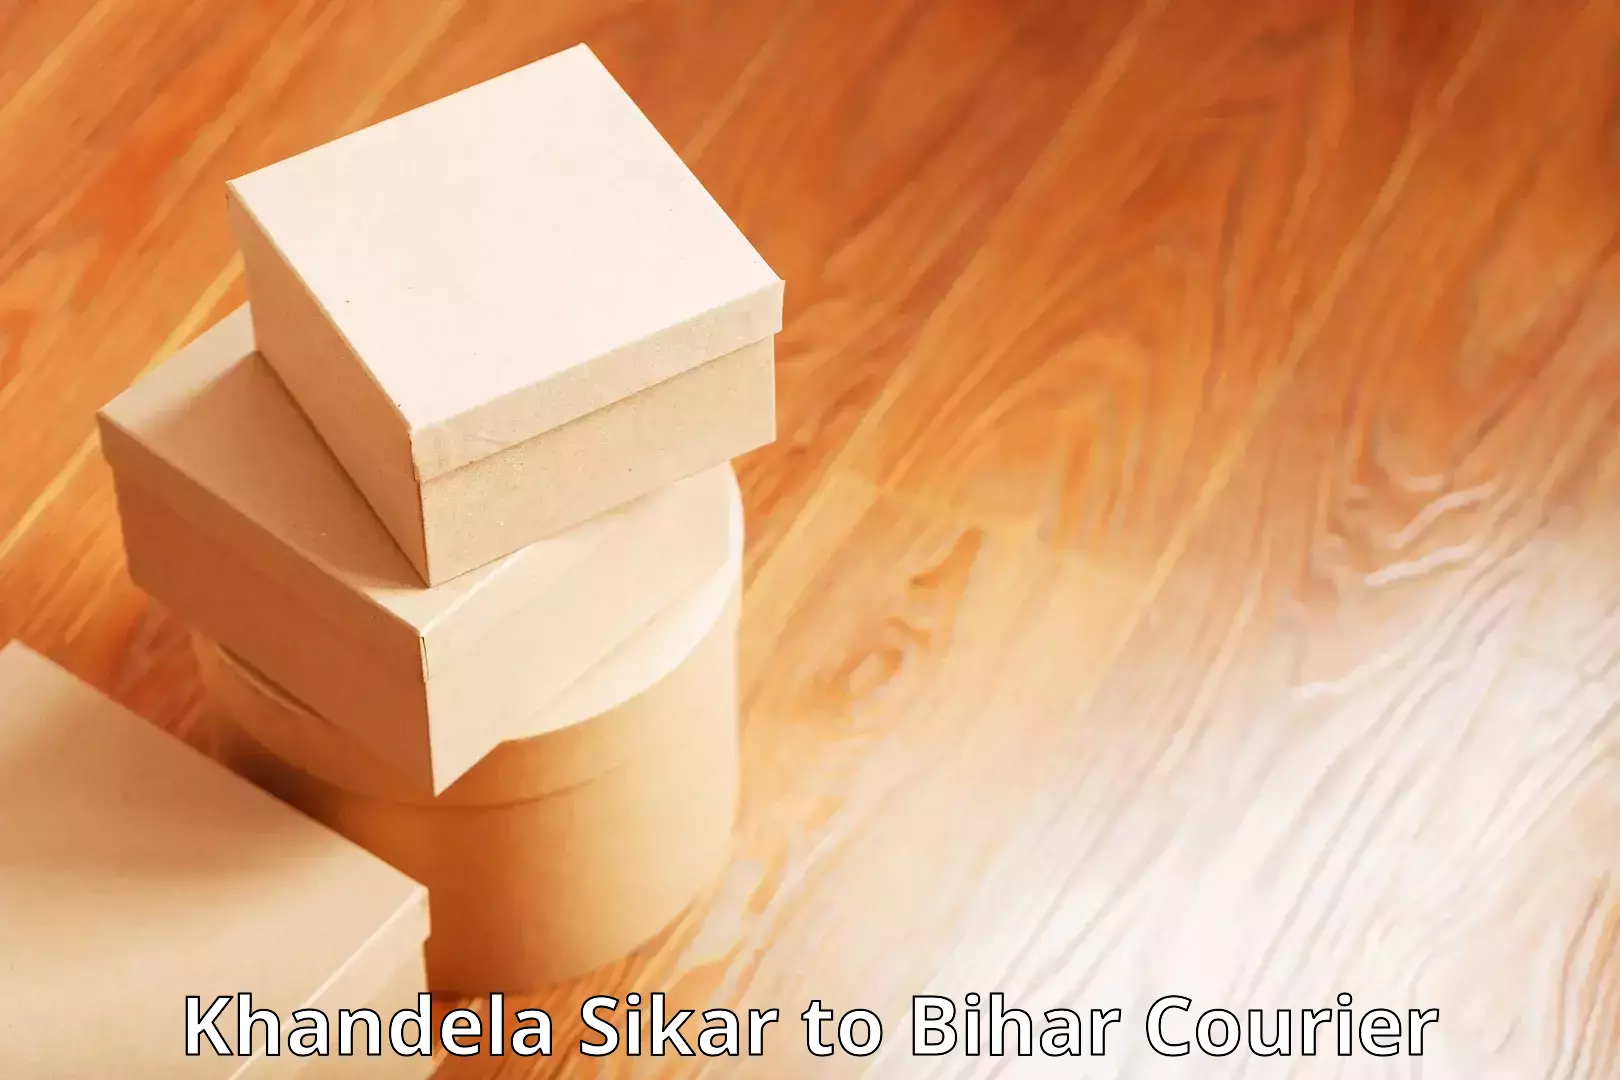 High-quality delivery services Khandela Sikar to Bihar